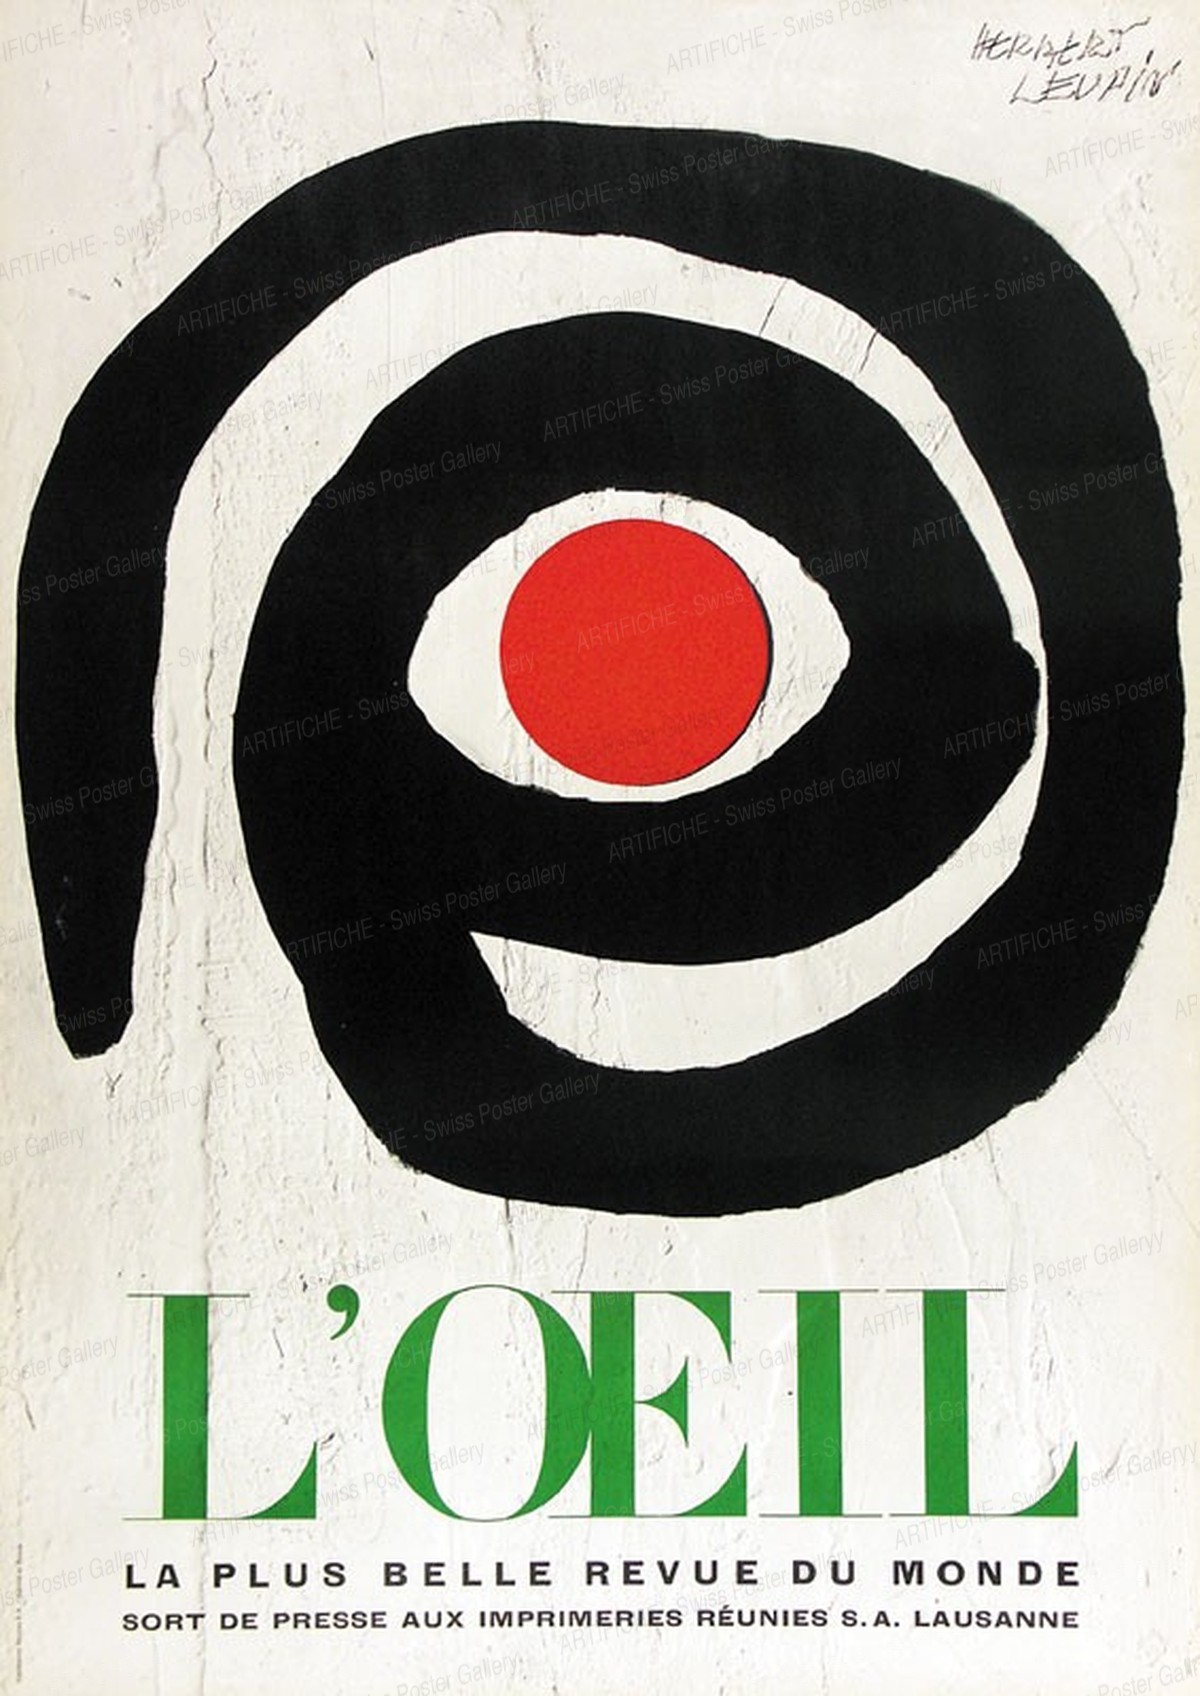 L’Oeil – The world’s best magazine, Herbert Leupin